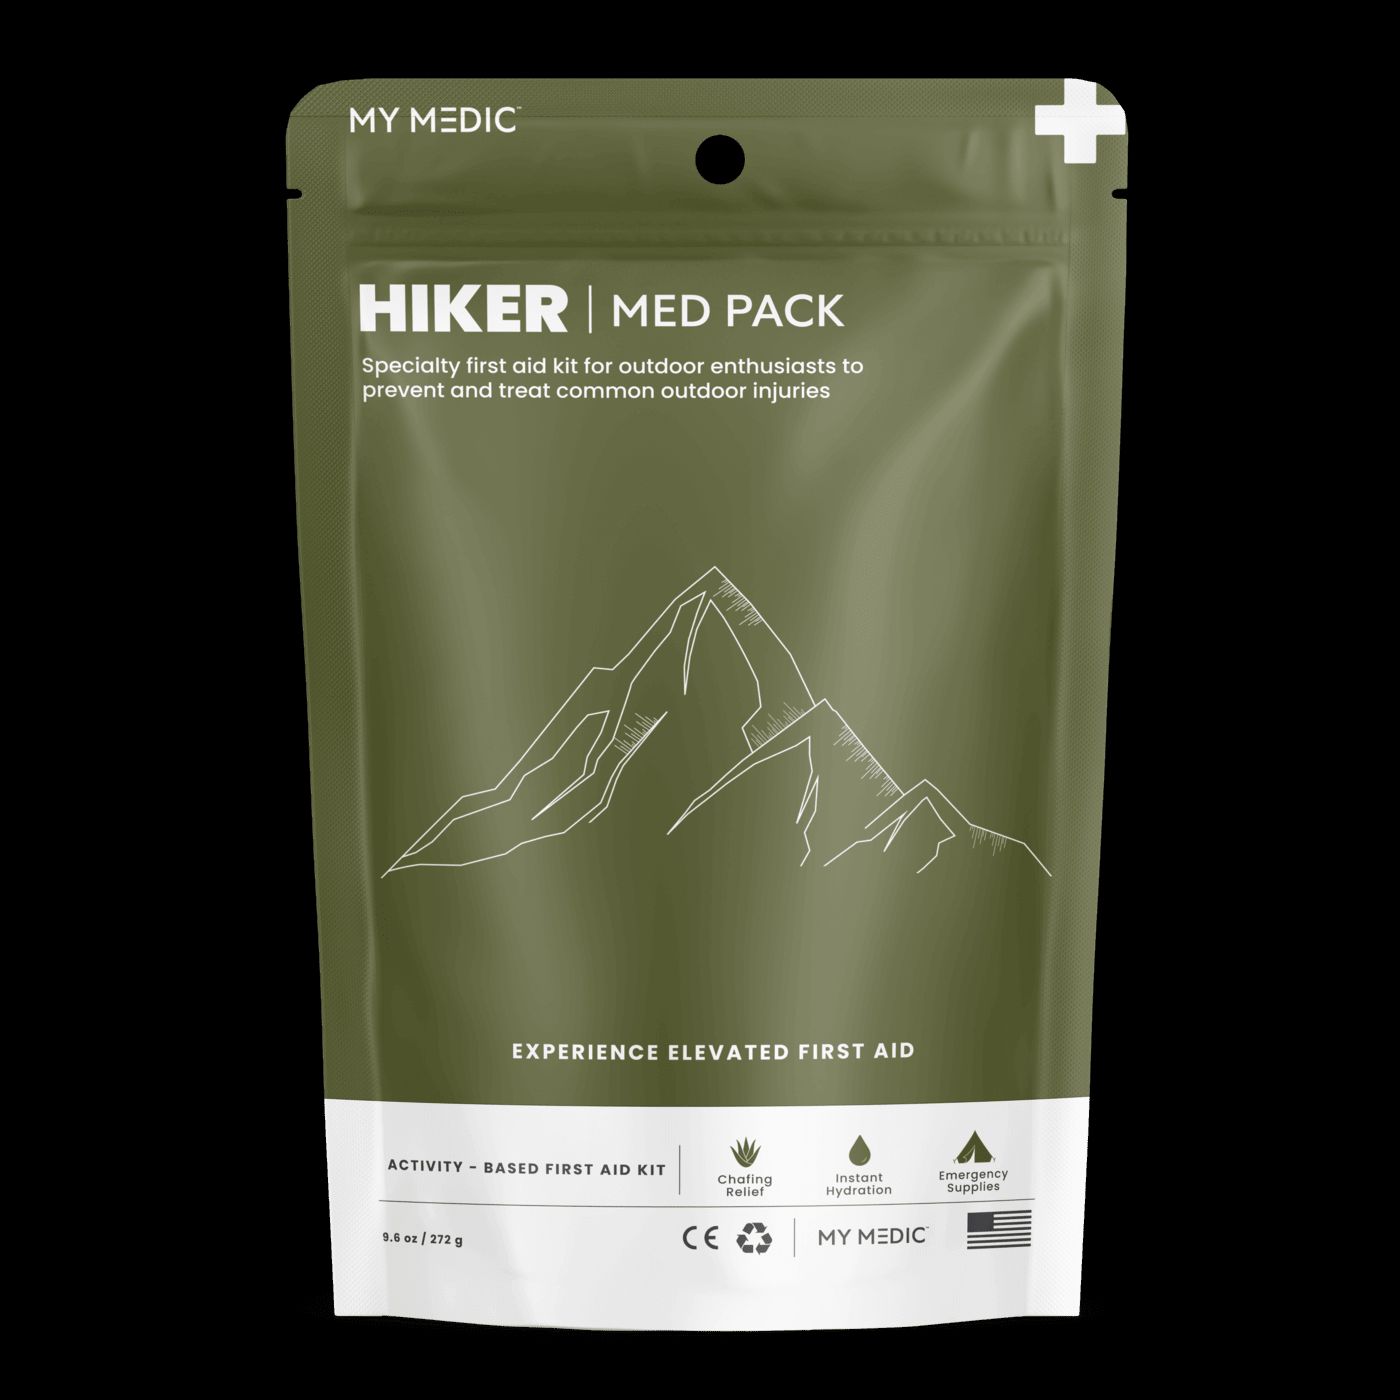 My Medic - Hiker Med Pack